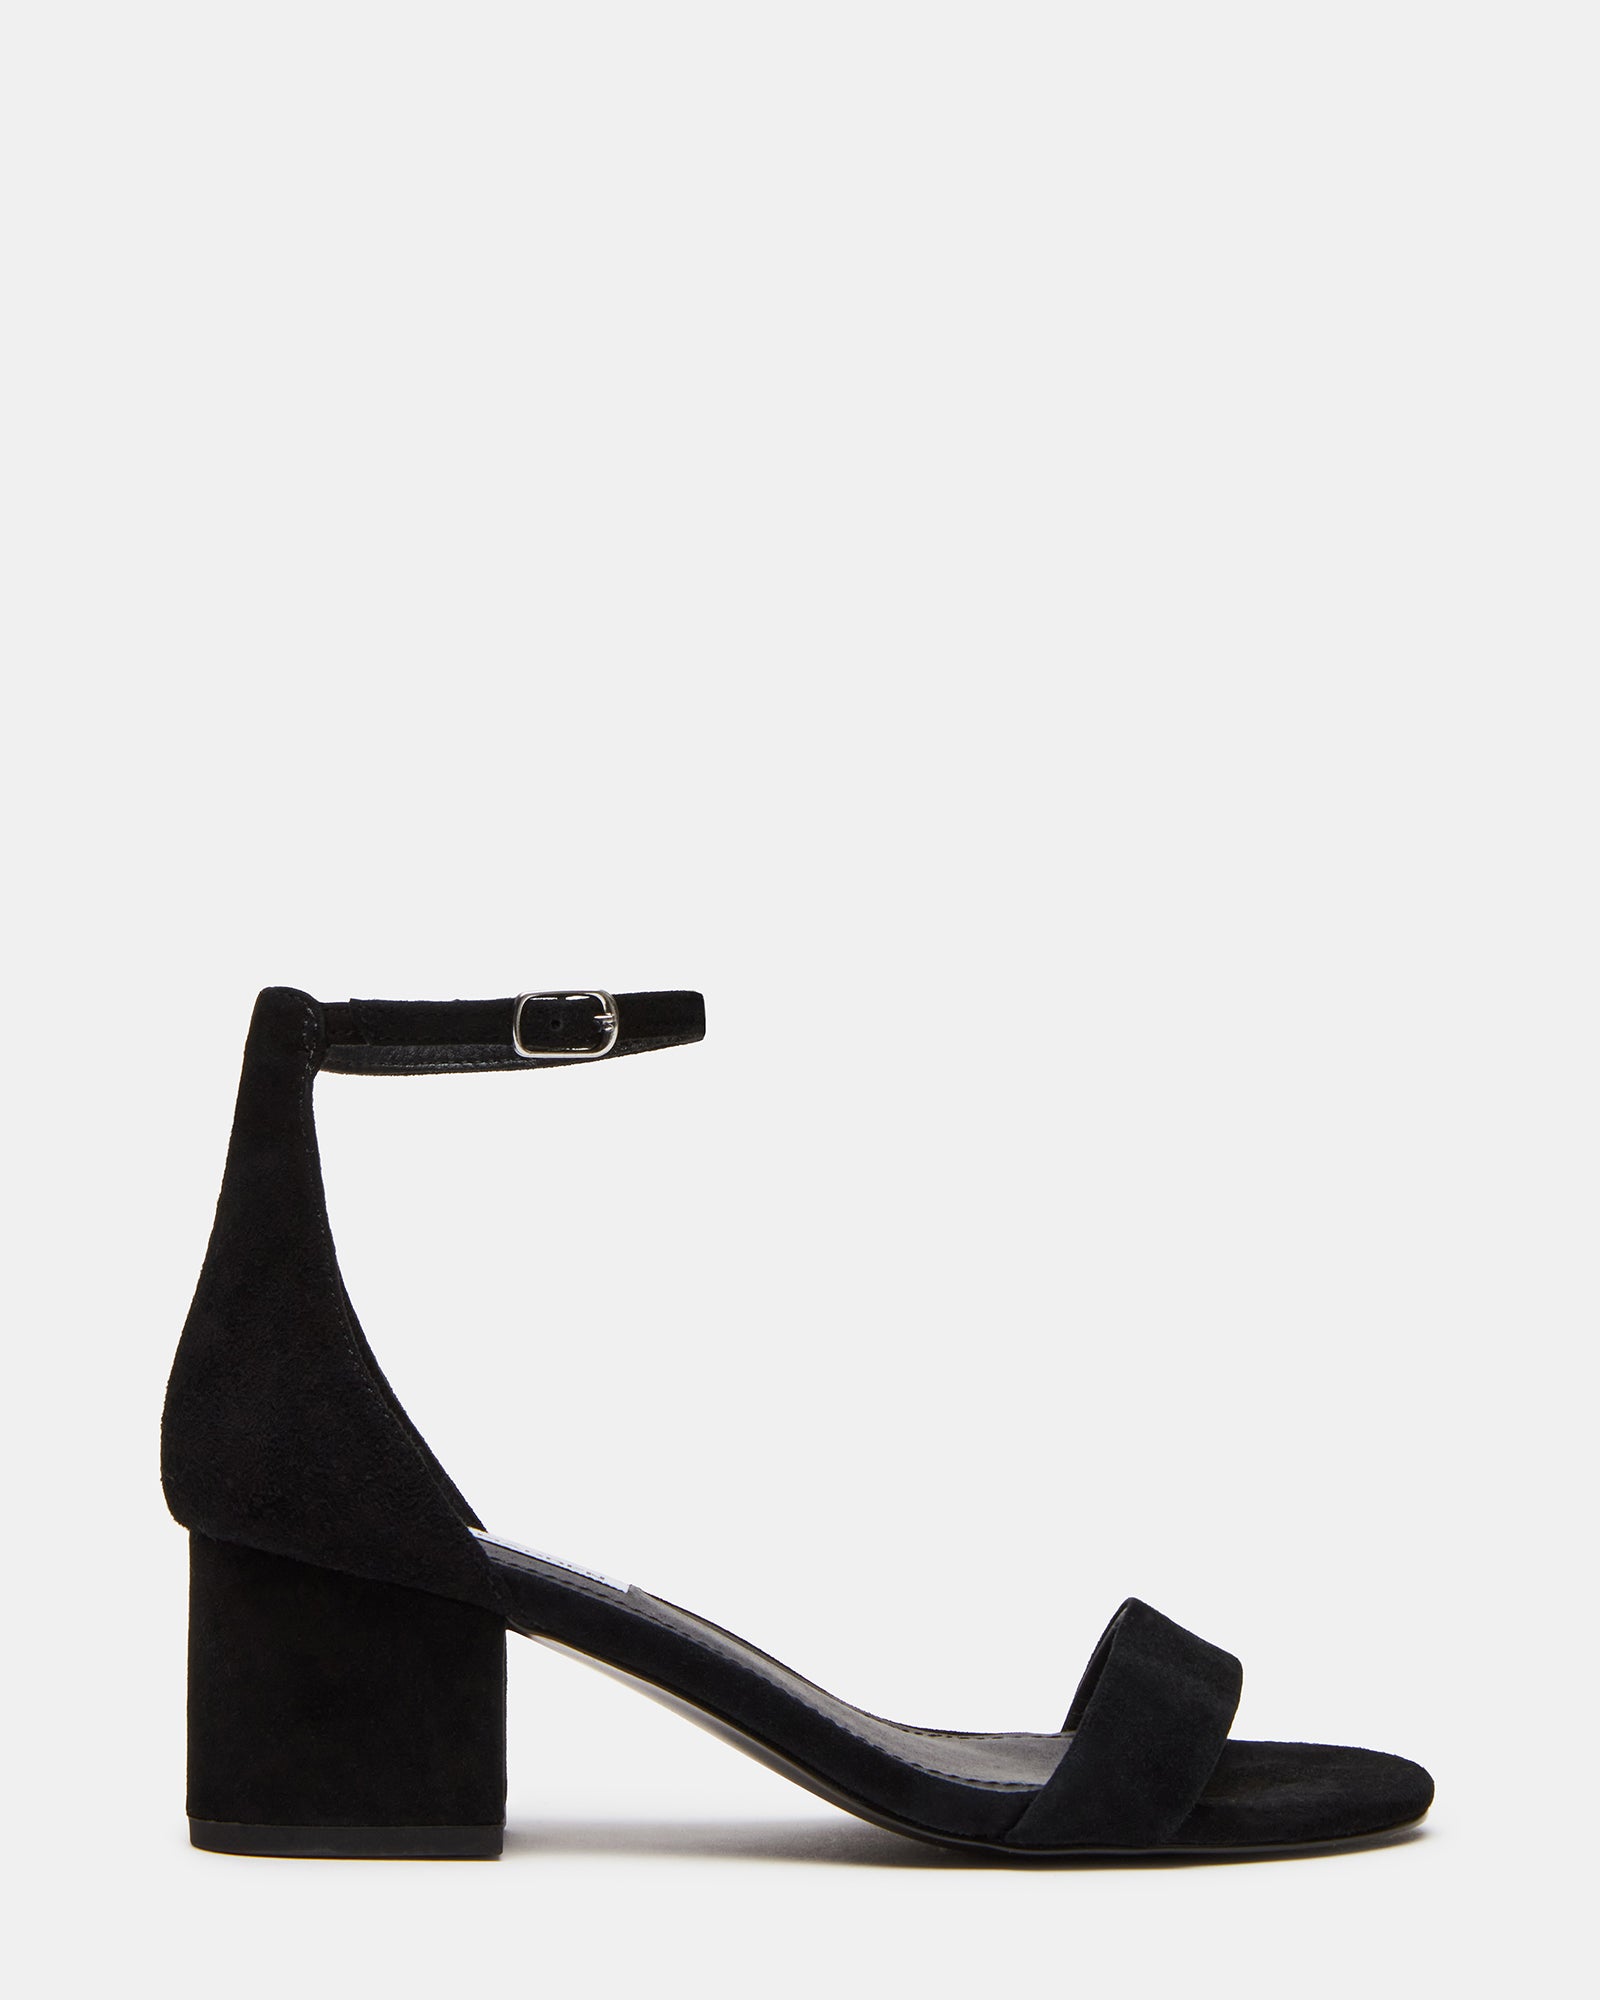 Fashion - Heels - Black | Heels, Beautiful shoes, Black high heels